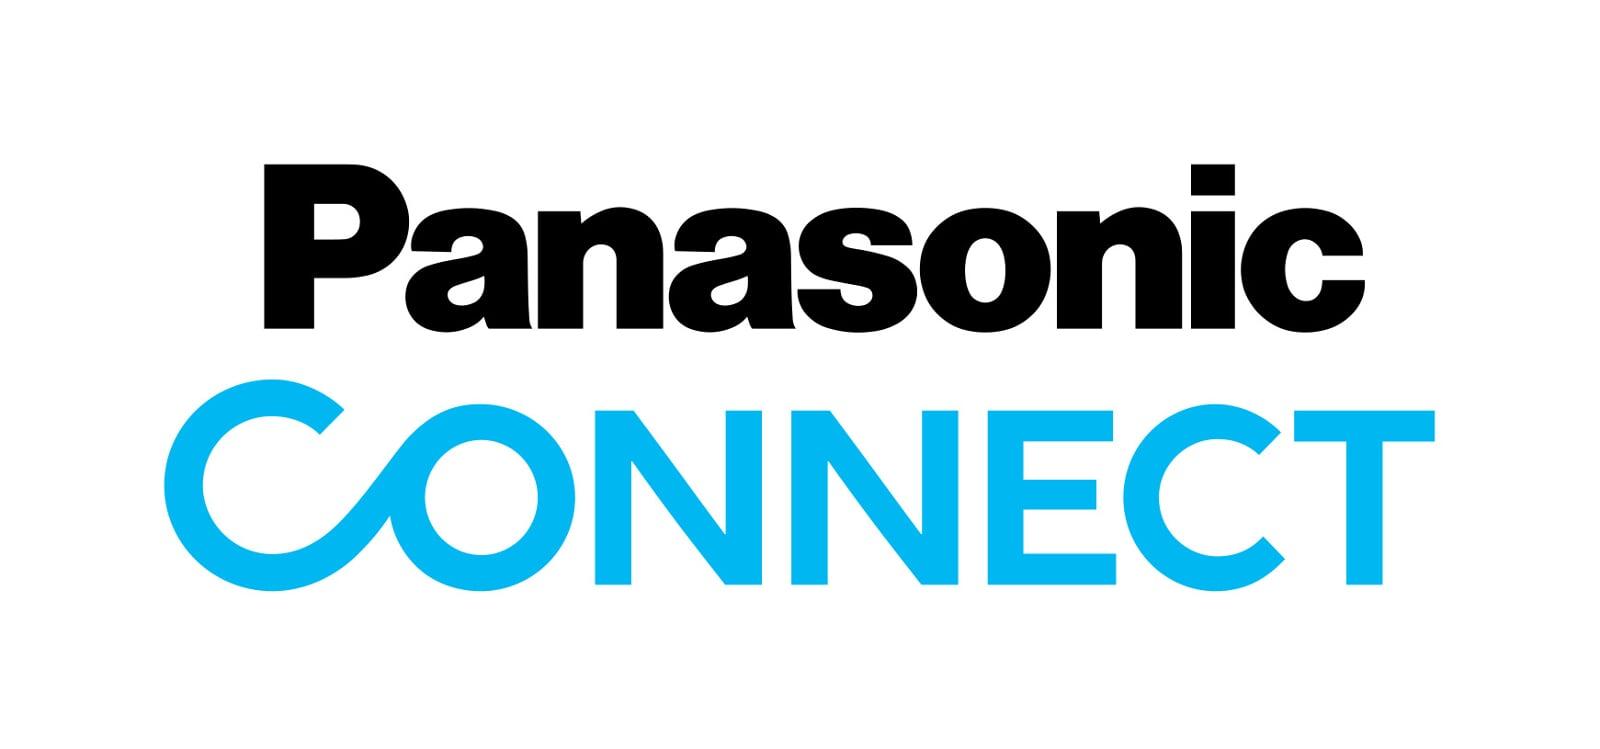 intoPIX customer Panasonic Connect